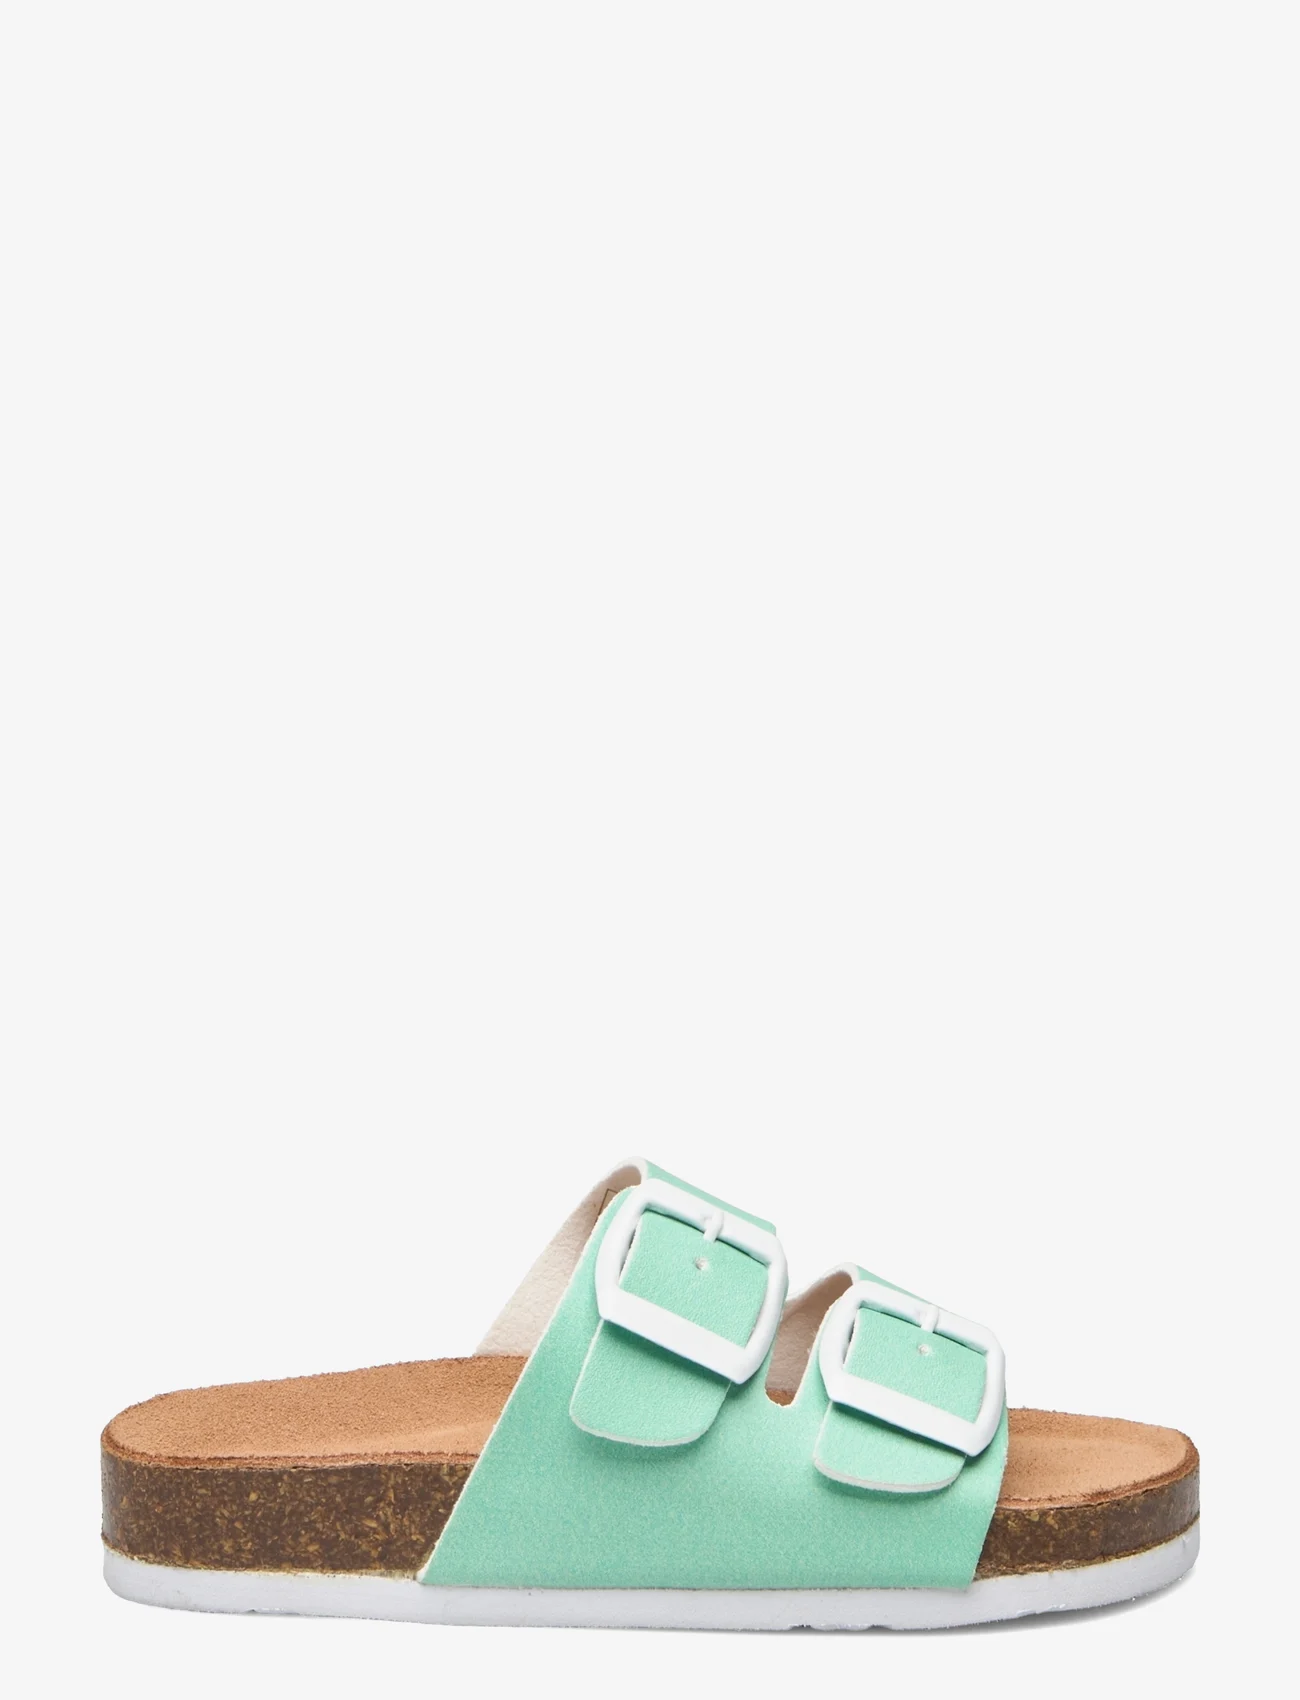 PAX - PIKA PAX - sandals - turquoise - 1